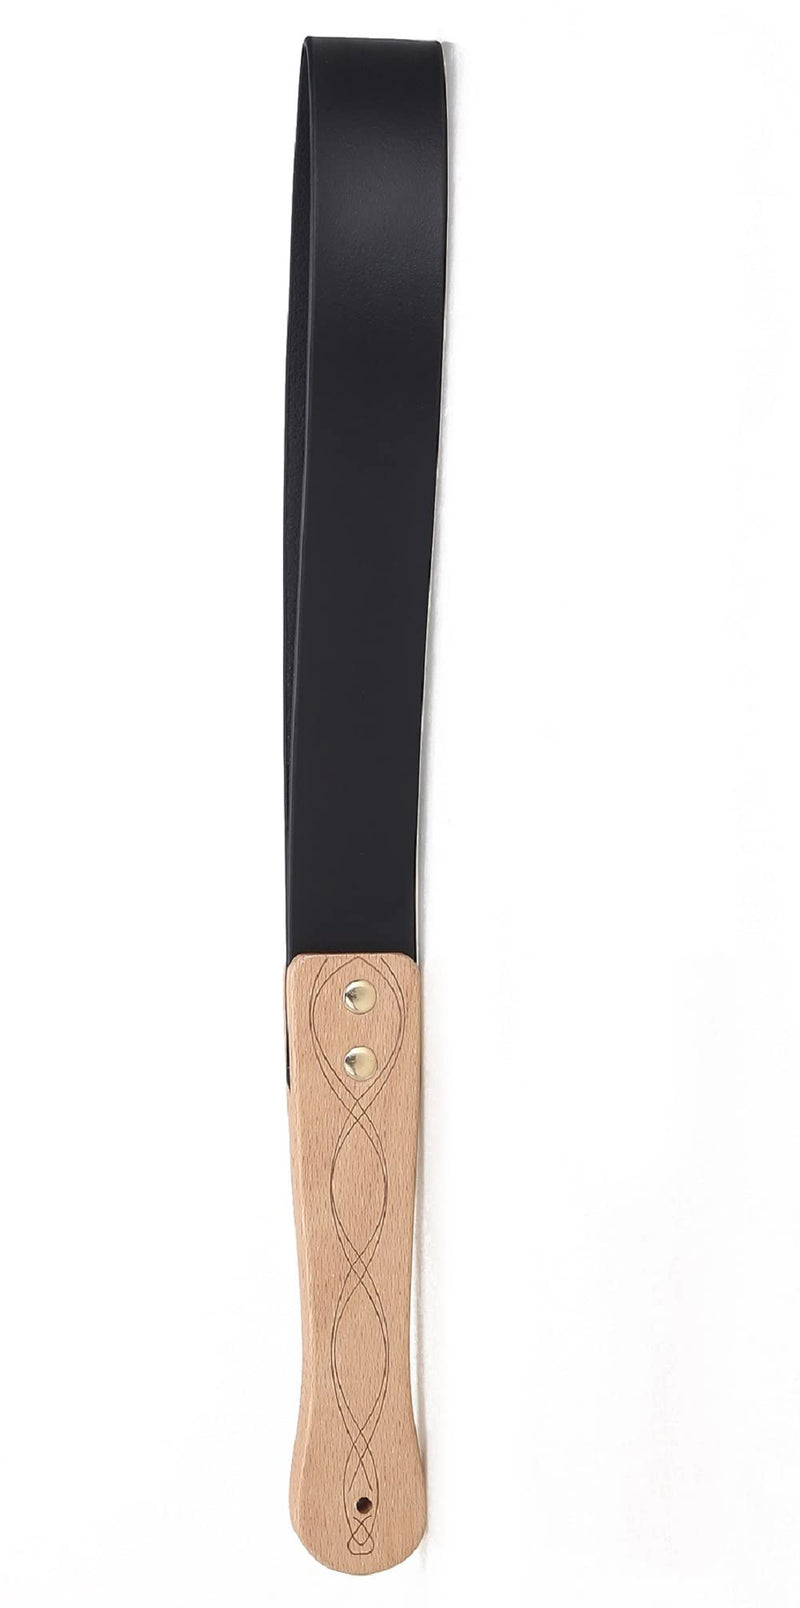 Turgorl Leather Paddle Wood Handle Belting Paddles Premium Quality Horse Strap-16.1x1.4inches - BeesActive Australia